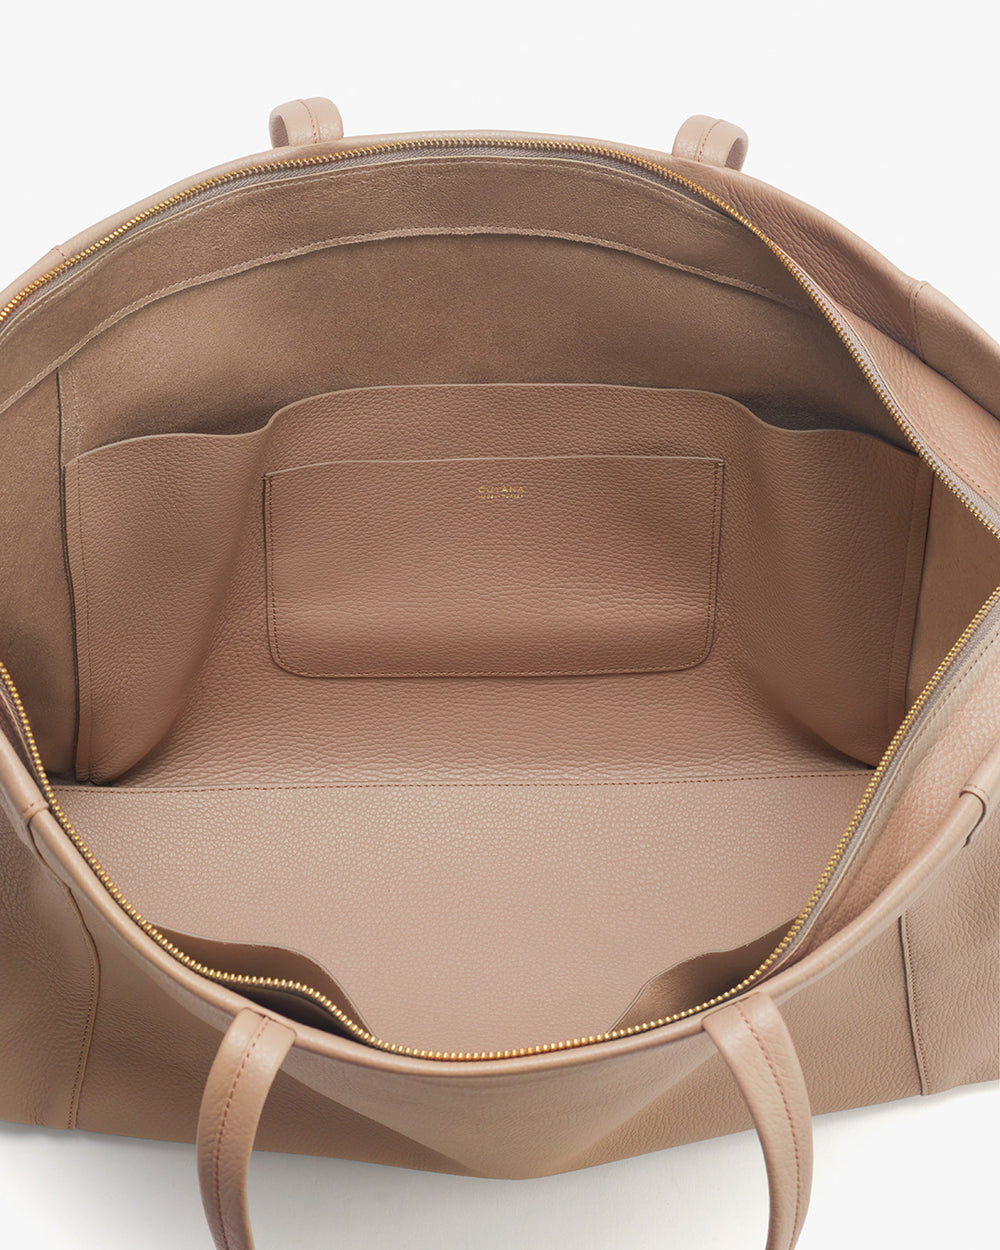 Open handbag showing interior with pockets.